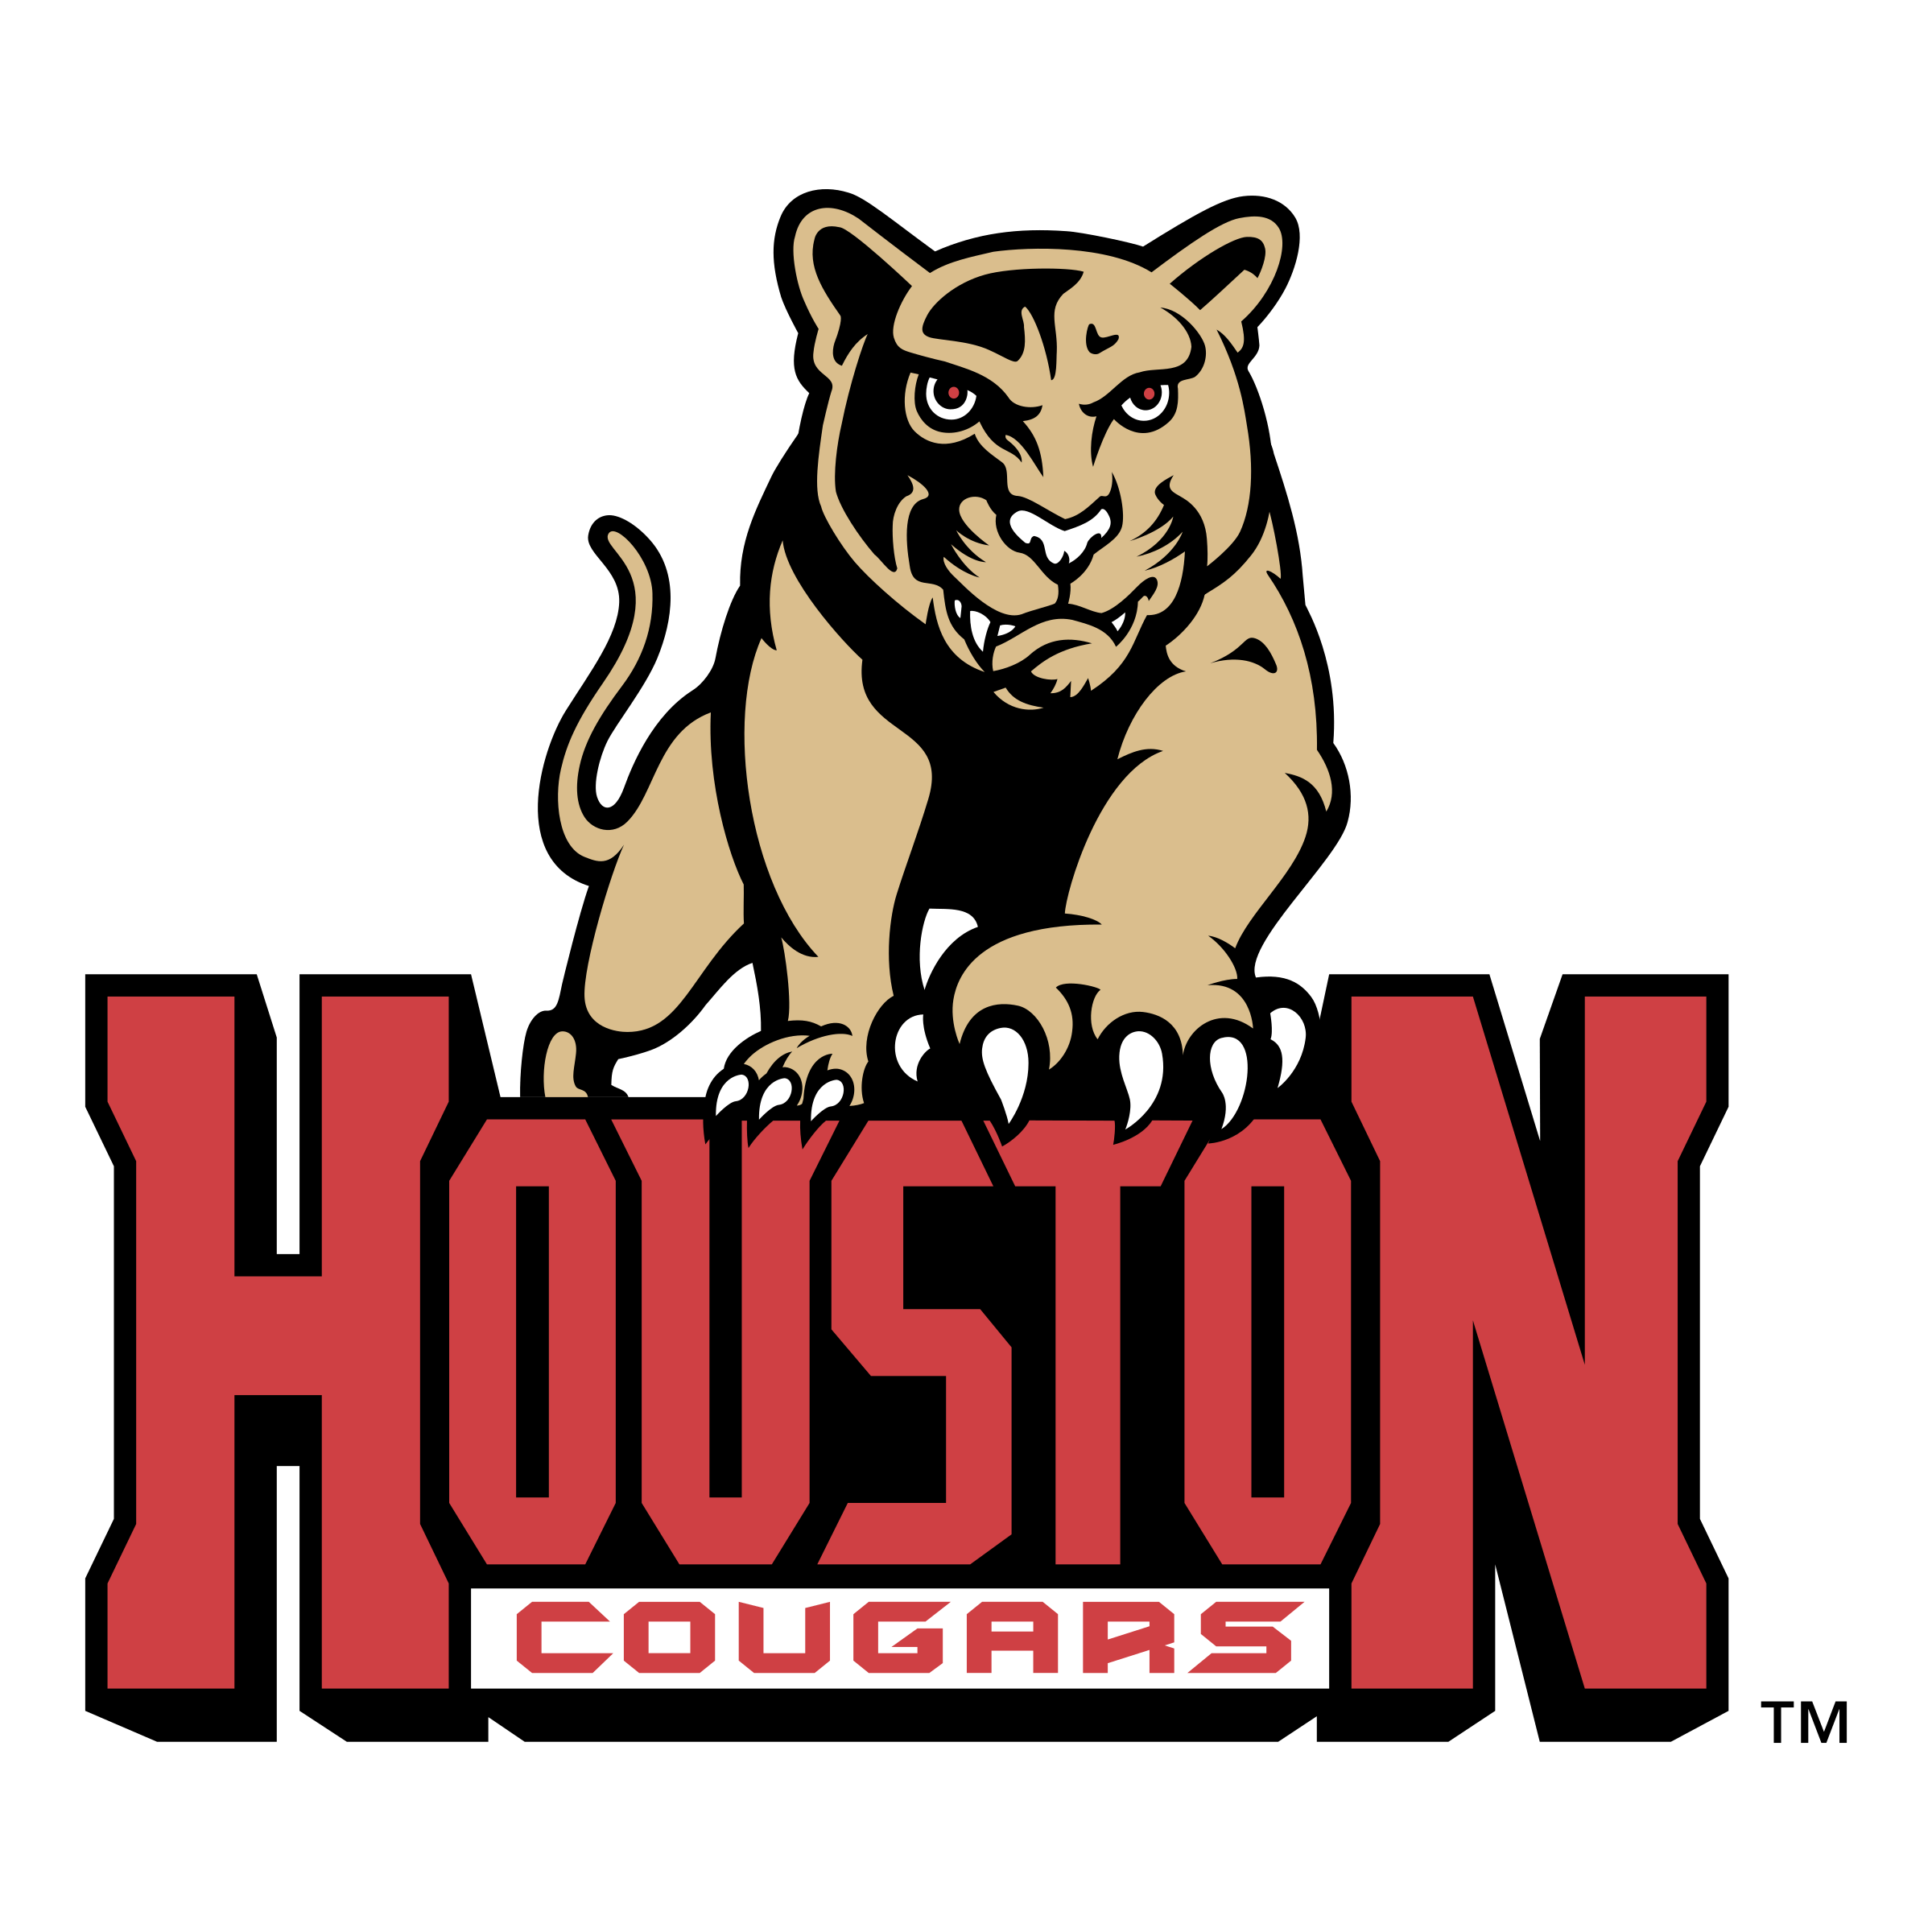 Cougars Logo - Houston Cougars Logo PNG Transparent & SVG Vector